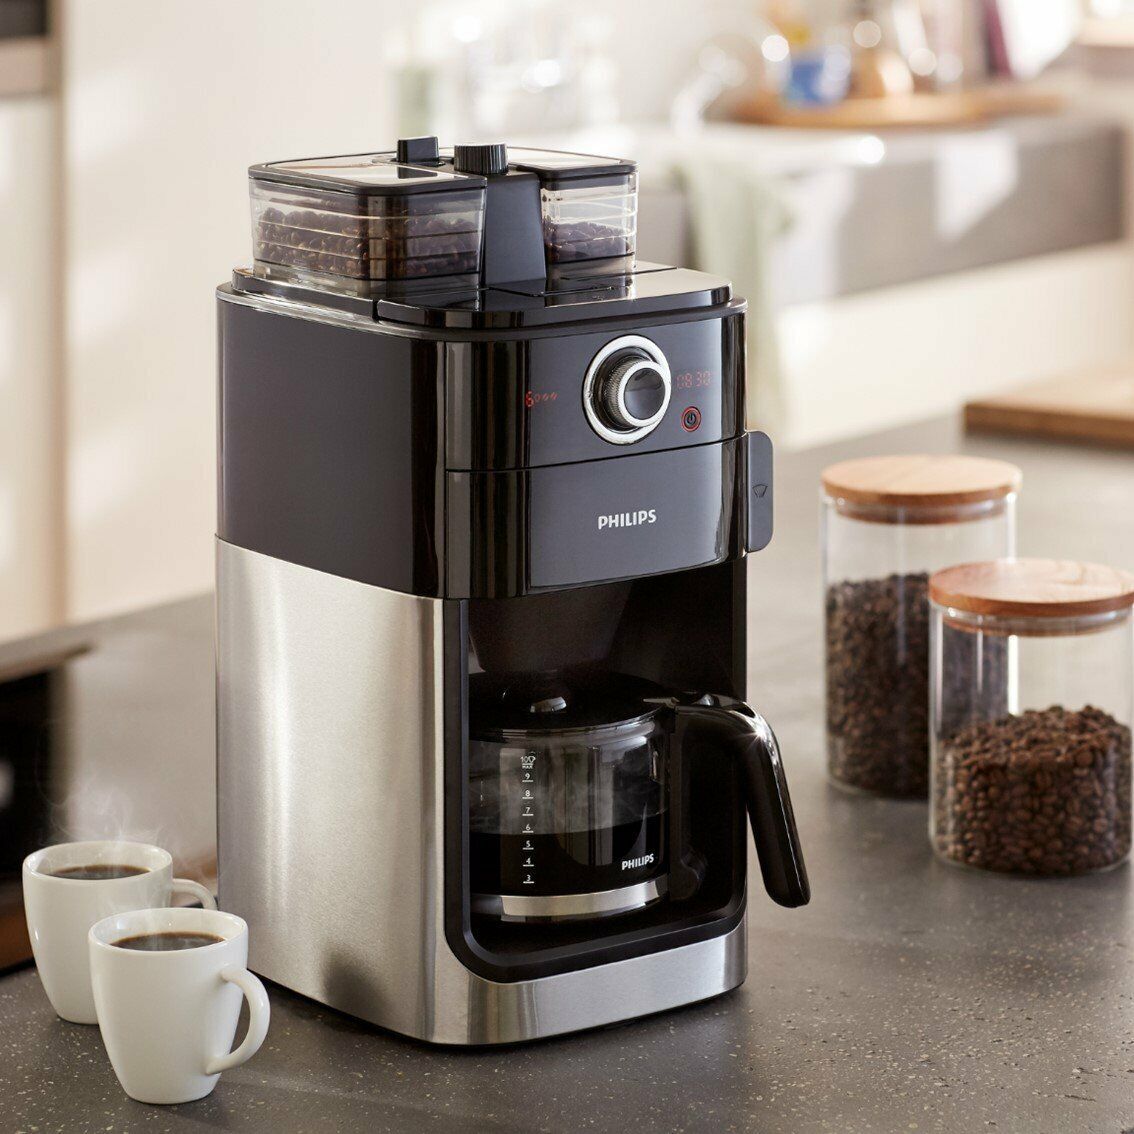 Express Sogo Automatic Coffee Maker, Fast, Powerful, Elegant